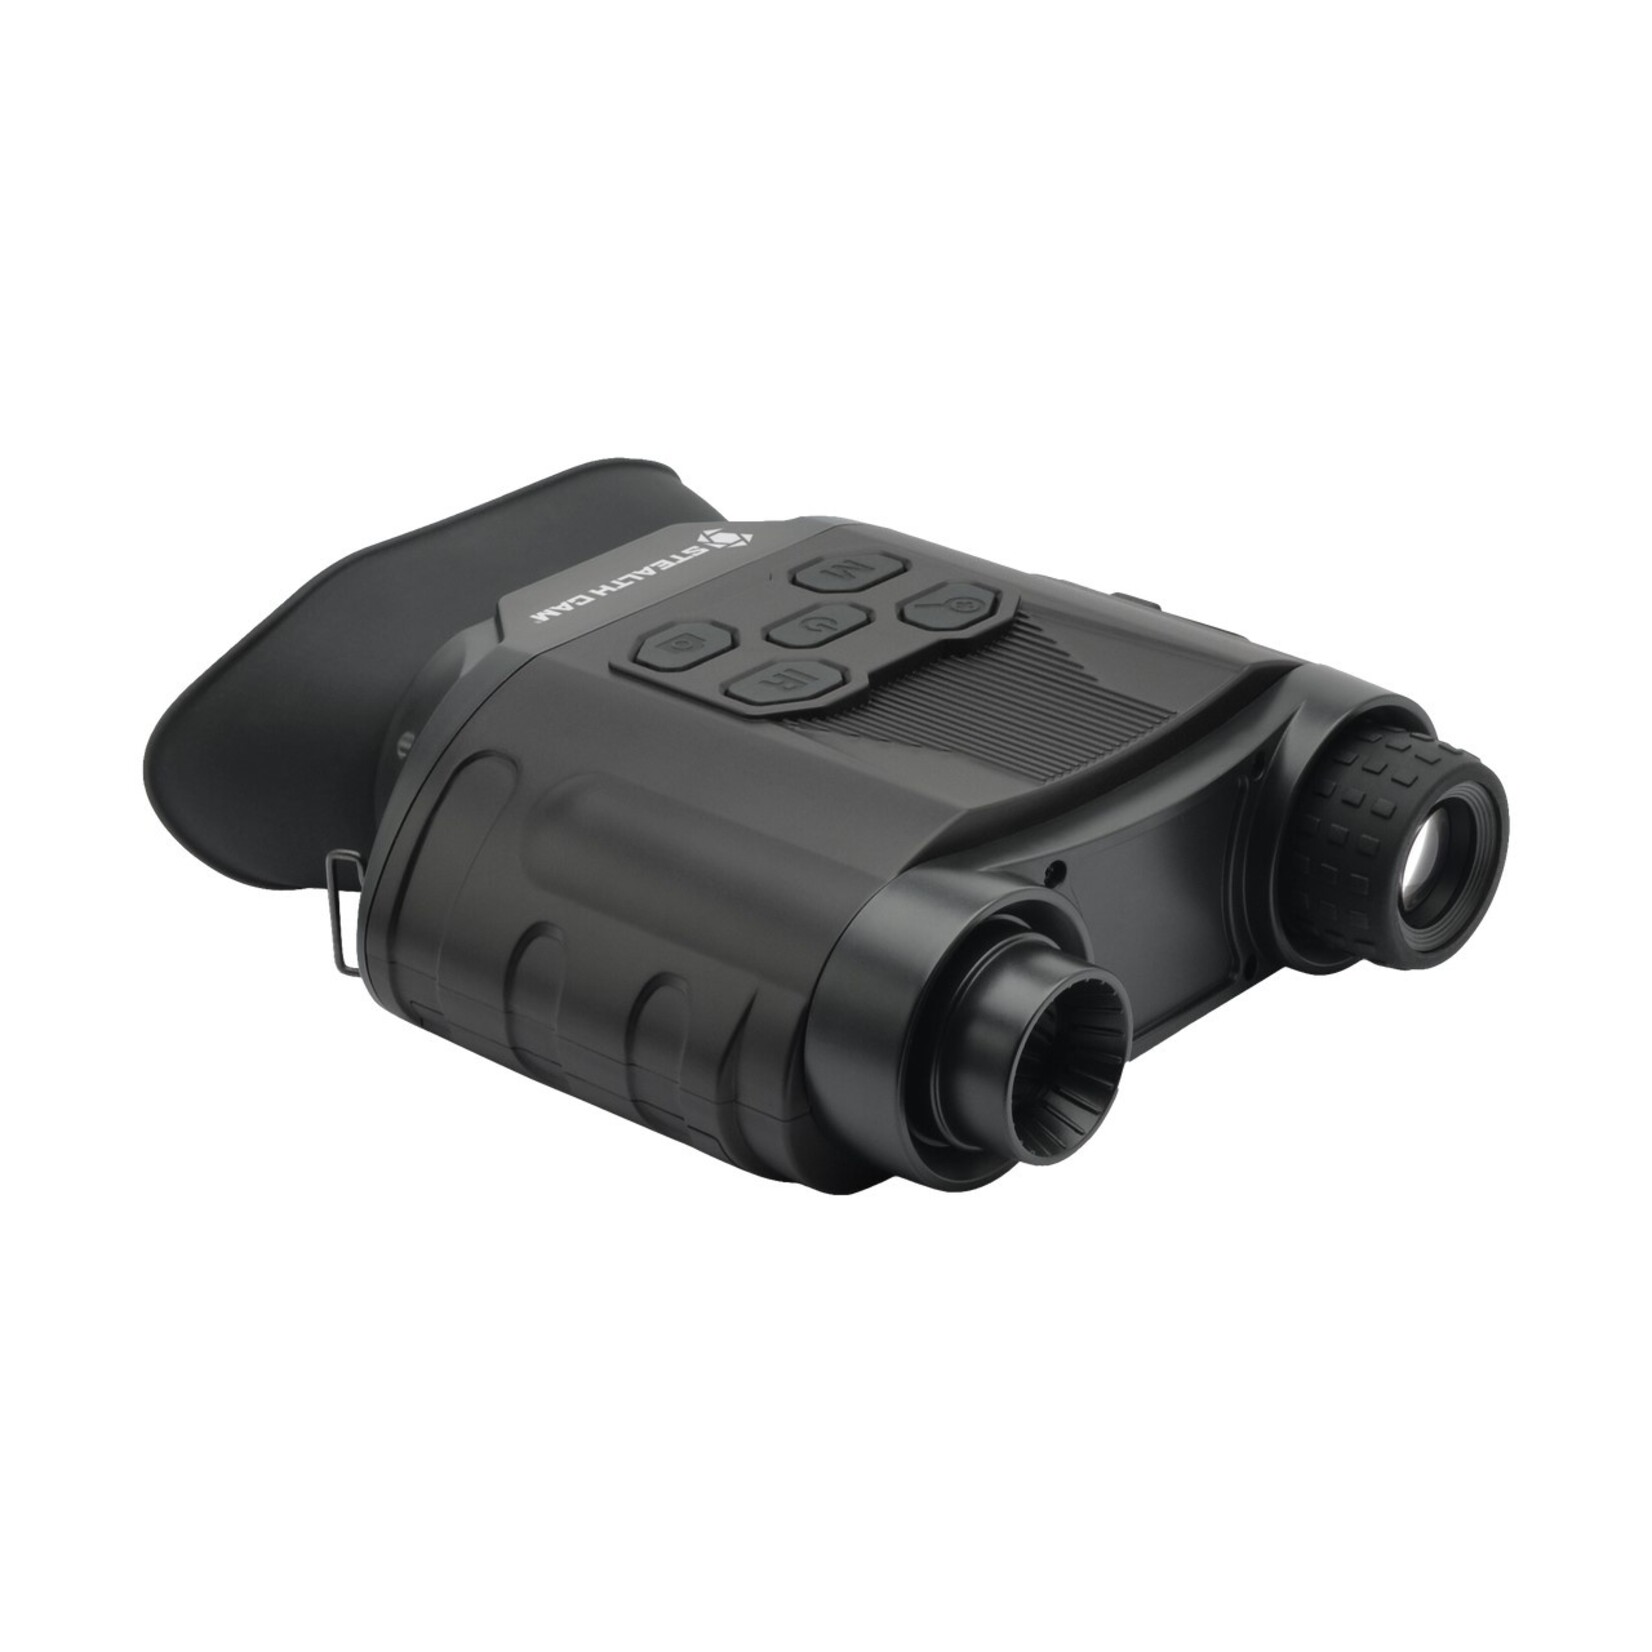 Stealth Cam Stealth Cam Digital Night Vision Binocular